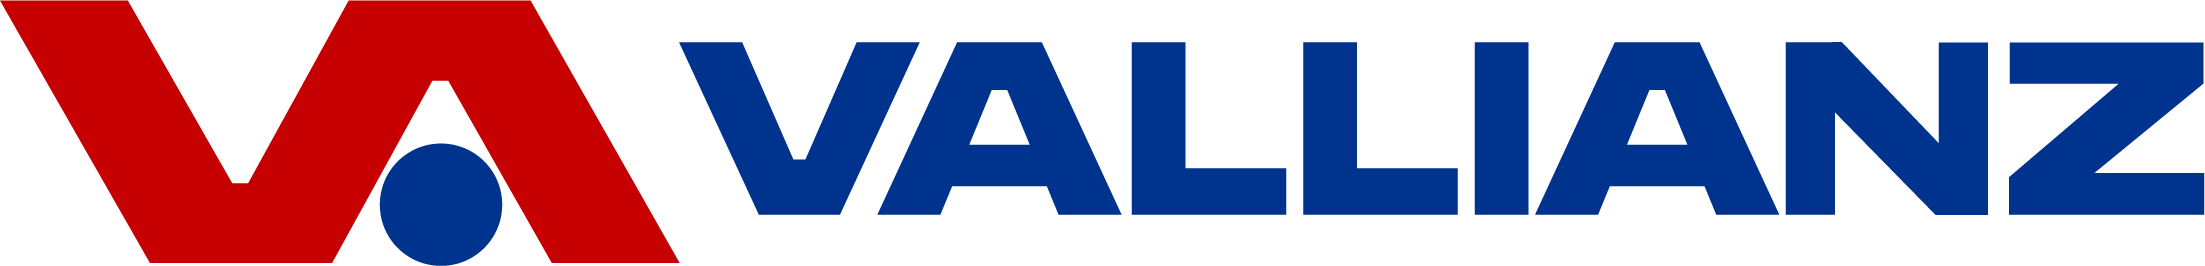 Vallianz Corporate Services Pte. Ltd. logo